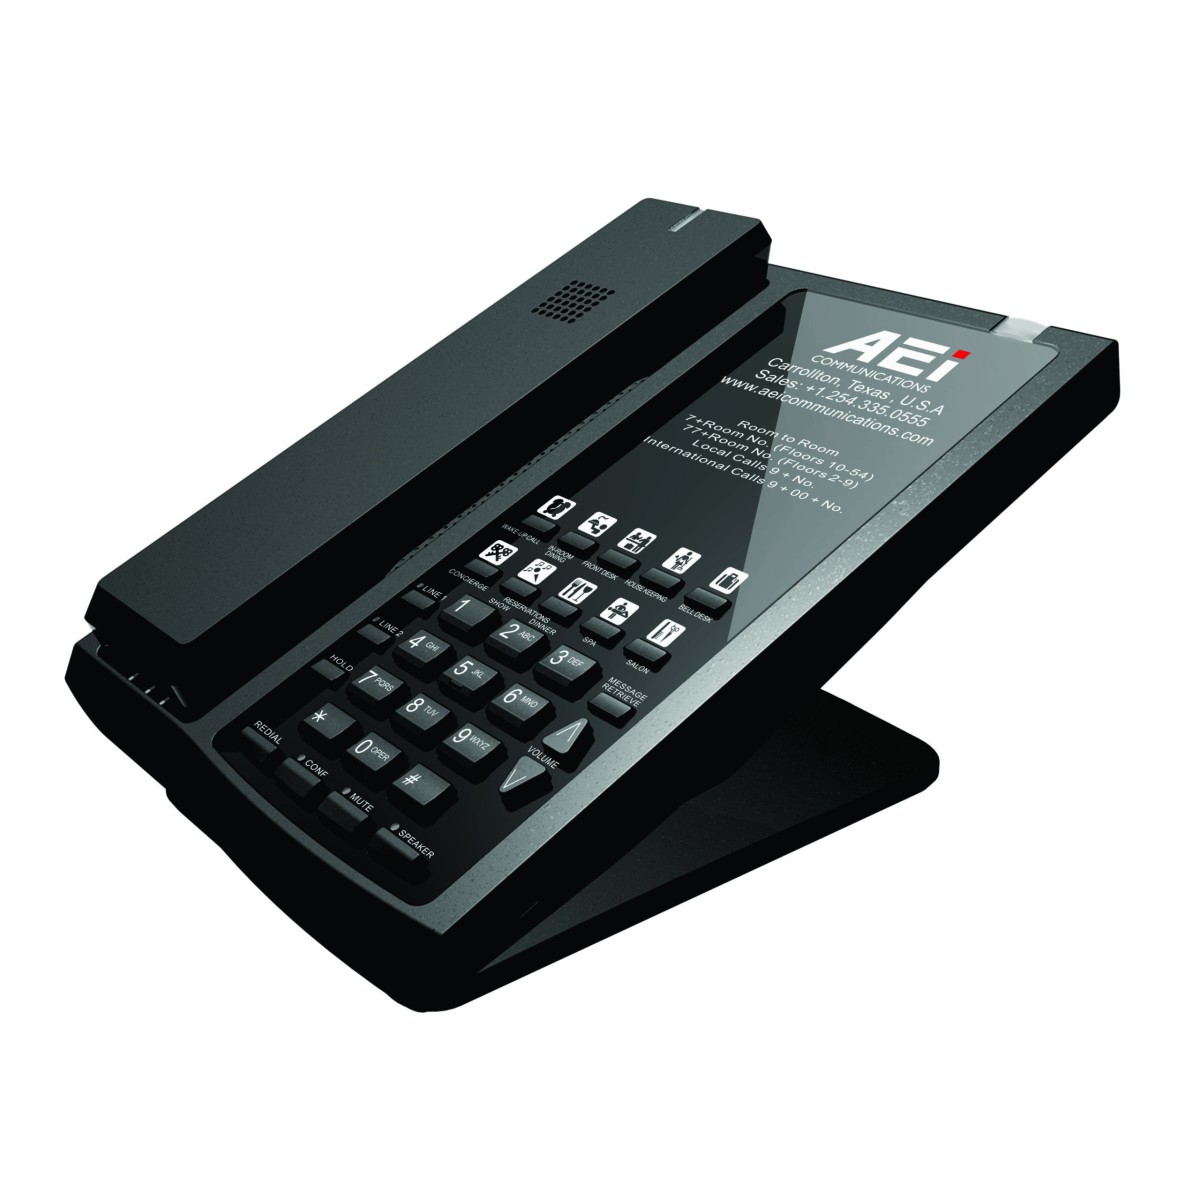 AEI ASP-8210-SMK/ASP-8110-SMK Dual or Single-Line Analog Cordless Full Duplex Speakerphone